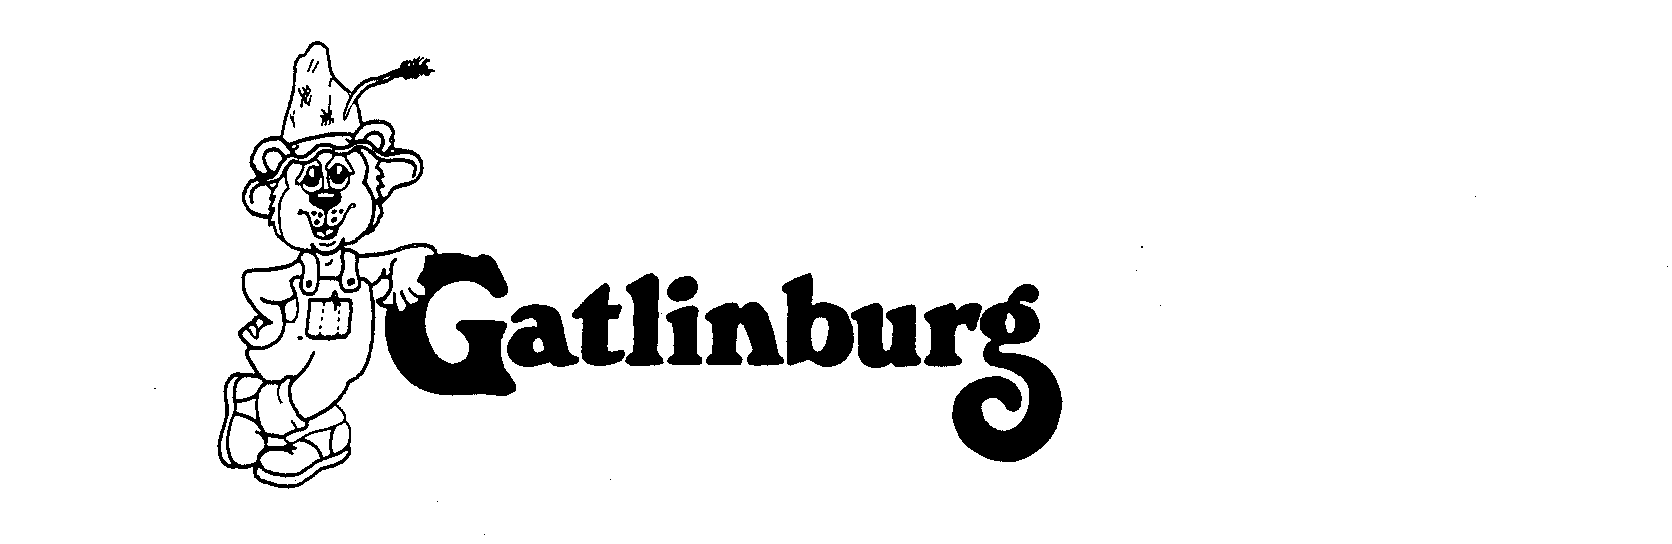 GATLINBURG